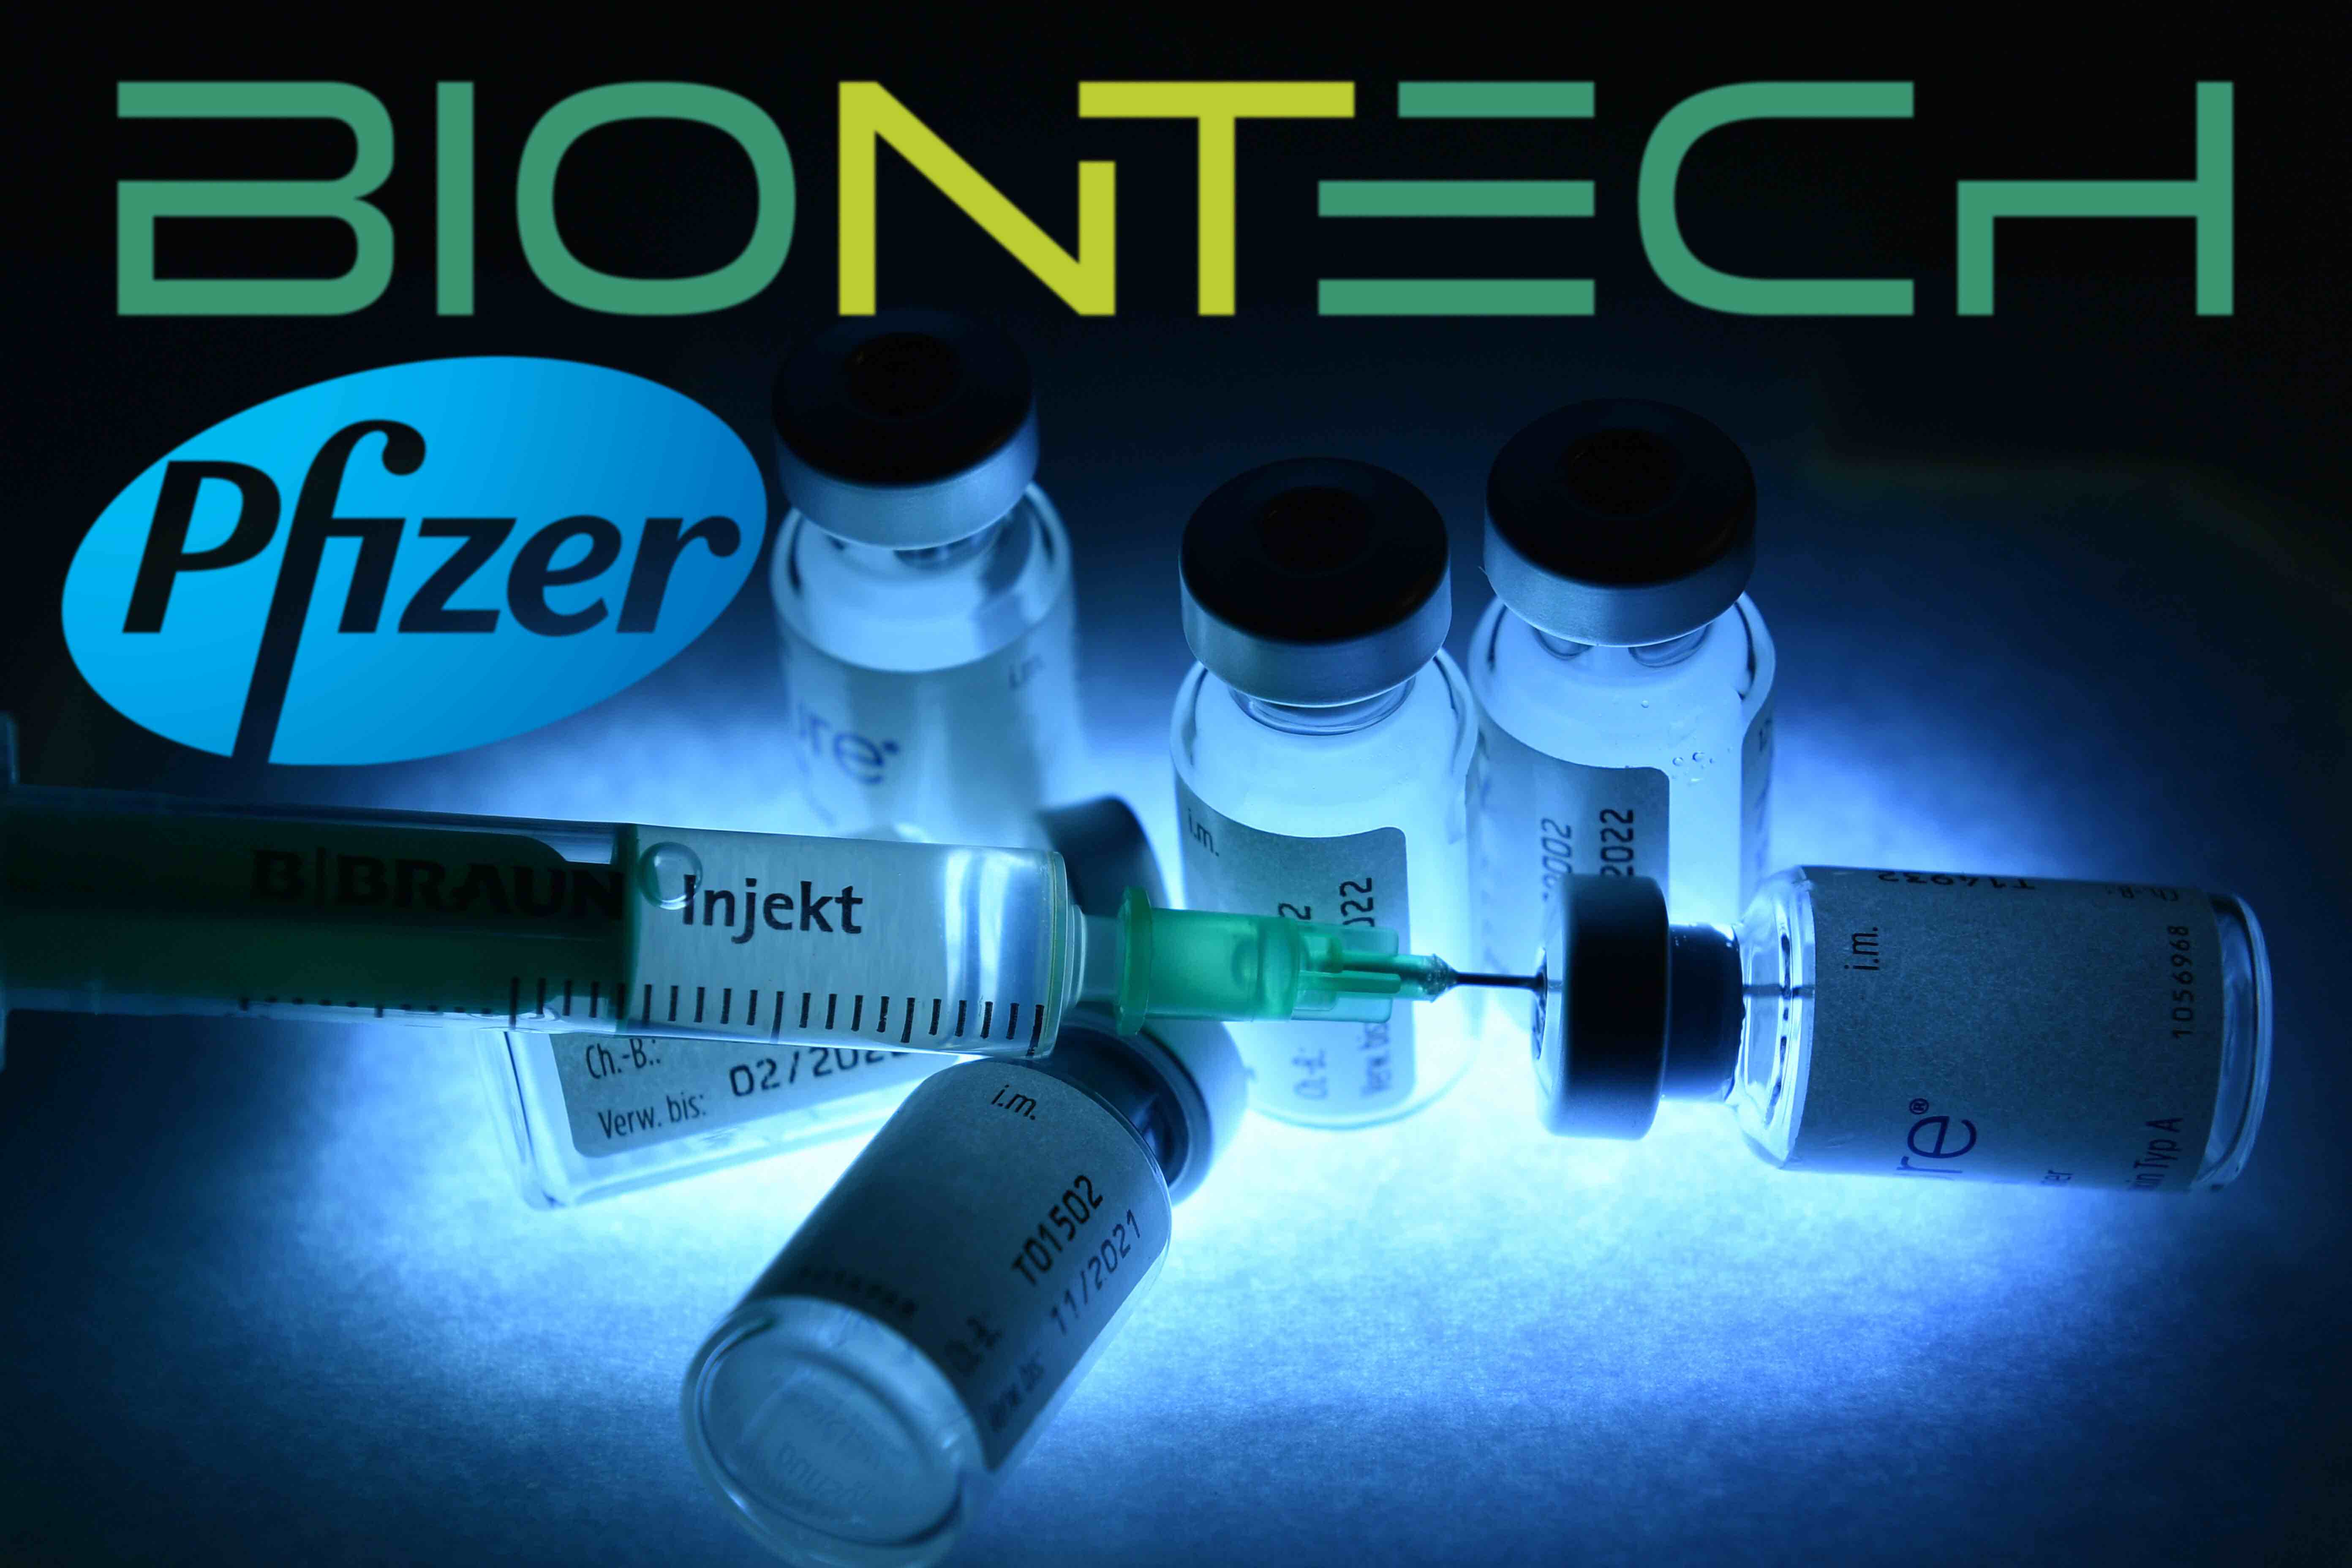 20201412-image-imago-mb-Biontech pfizer